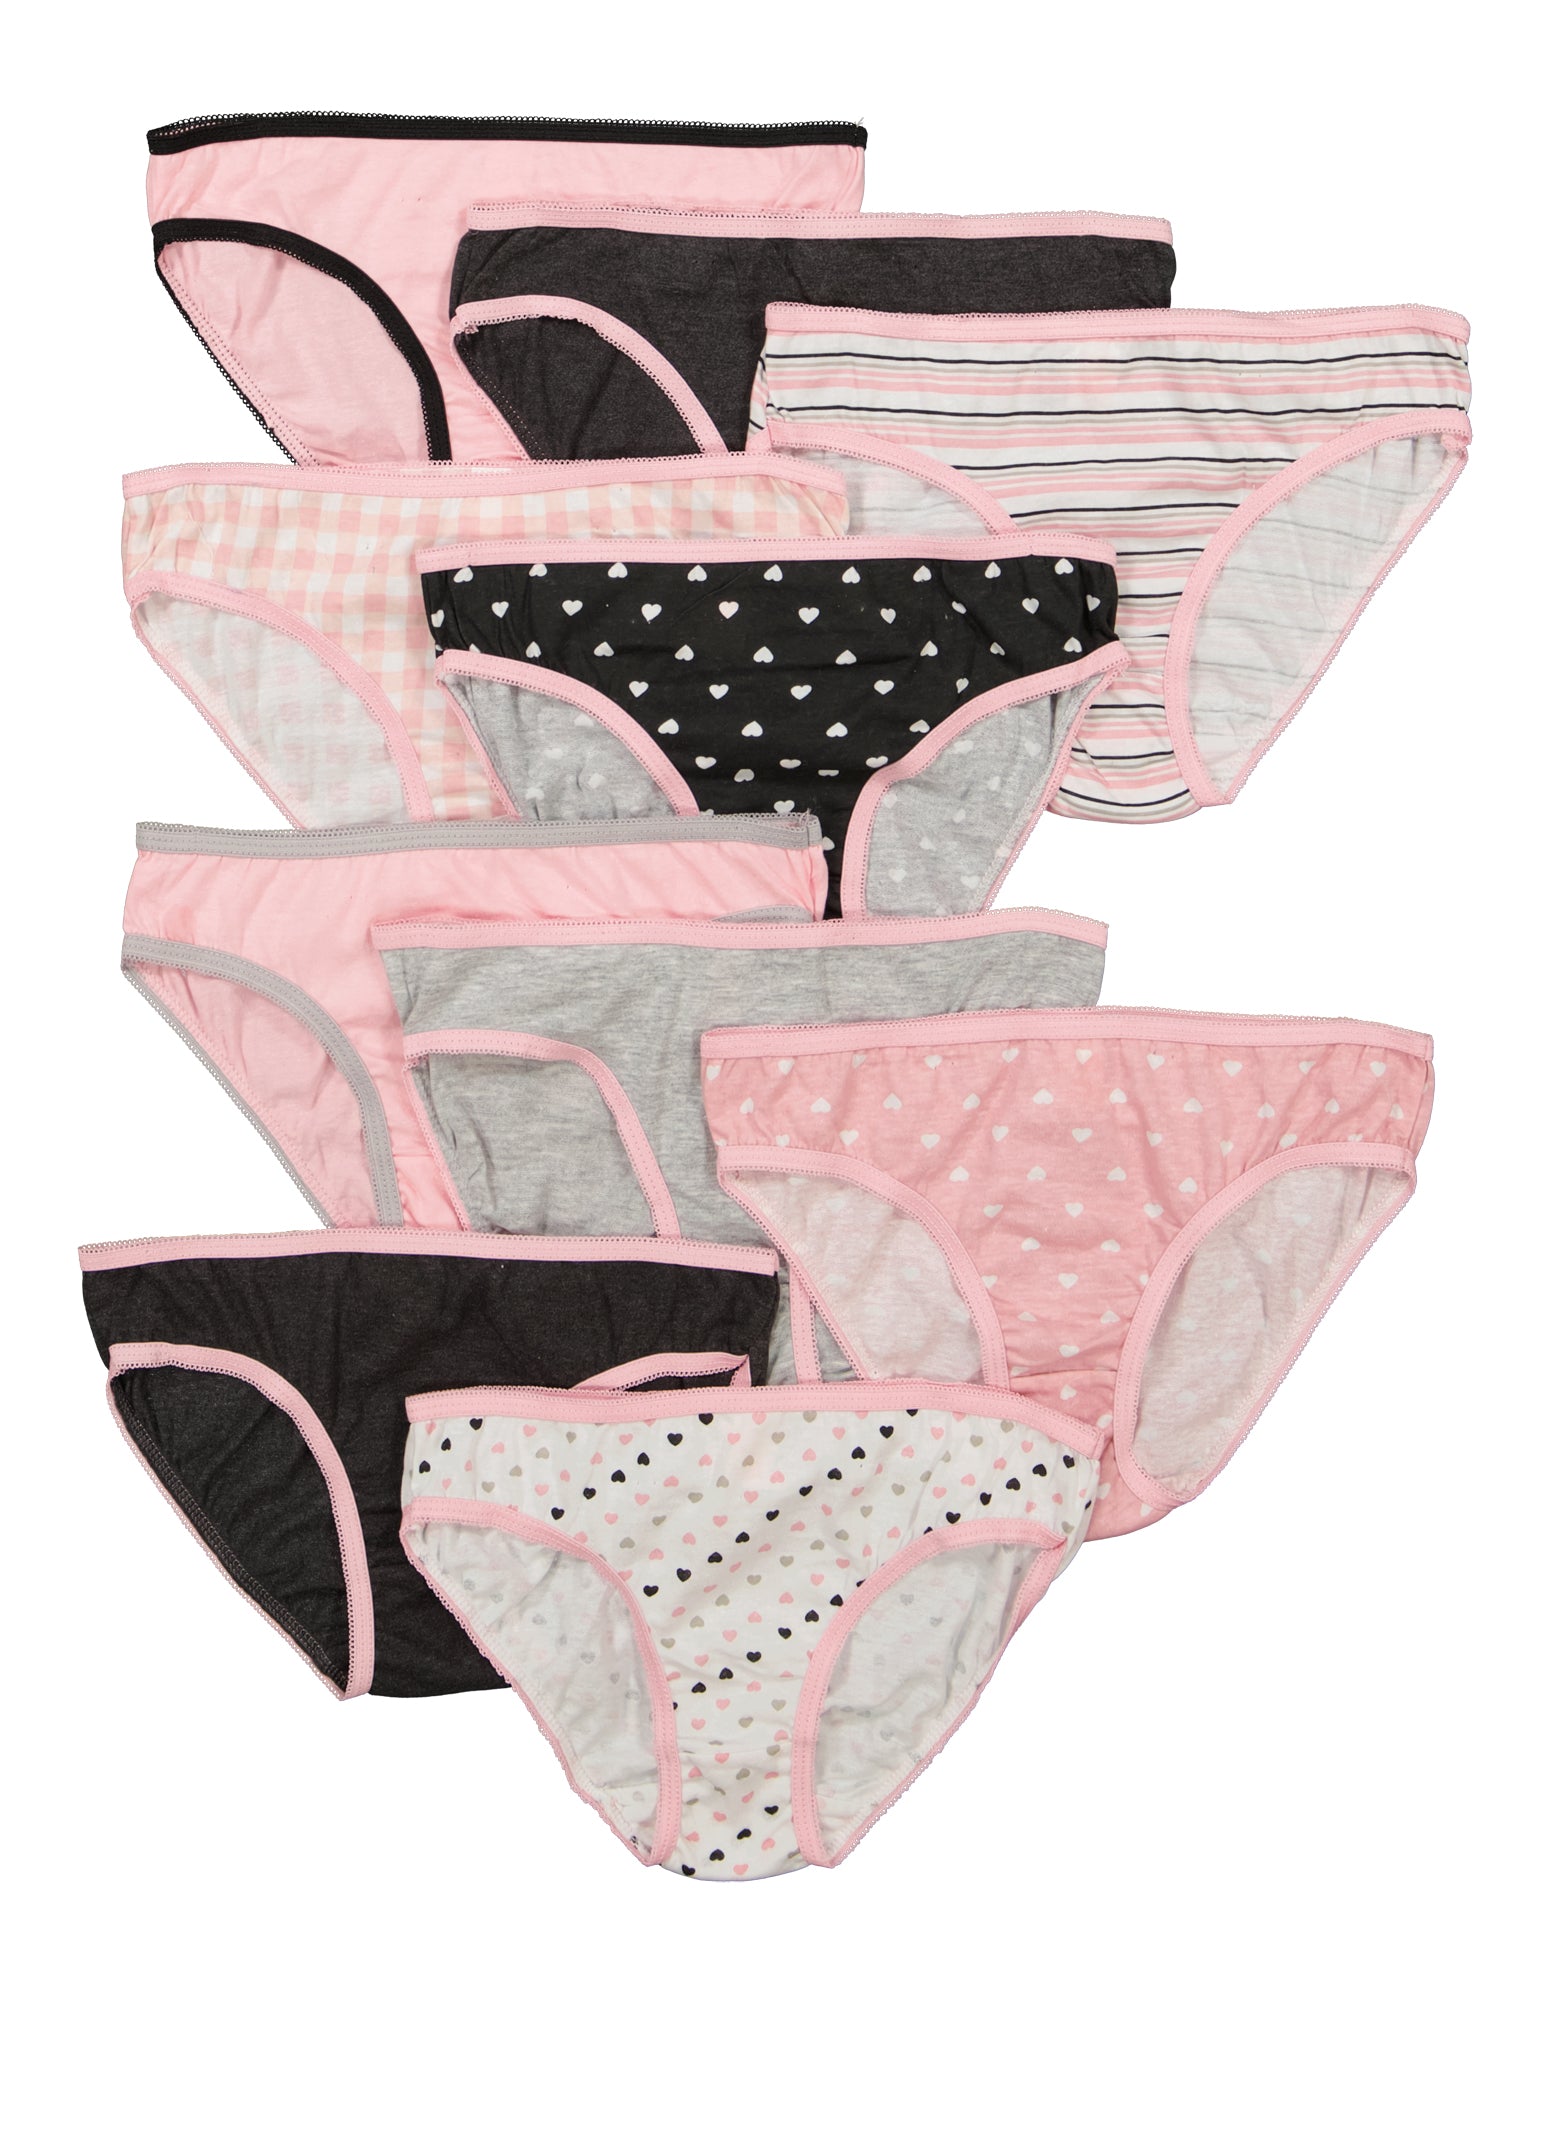 Shopkins Girls Underwear Rainbow Panties 3 Pack Briefs 